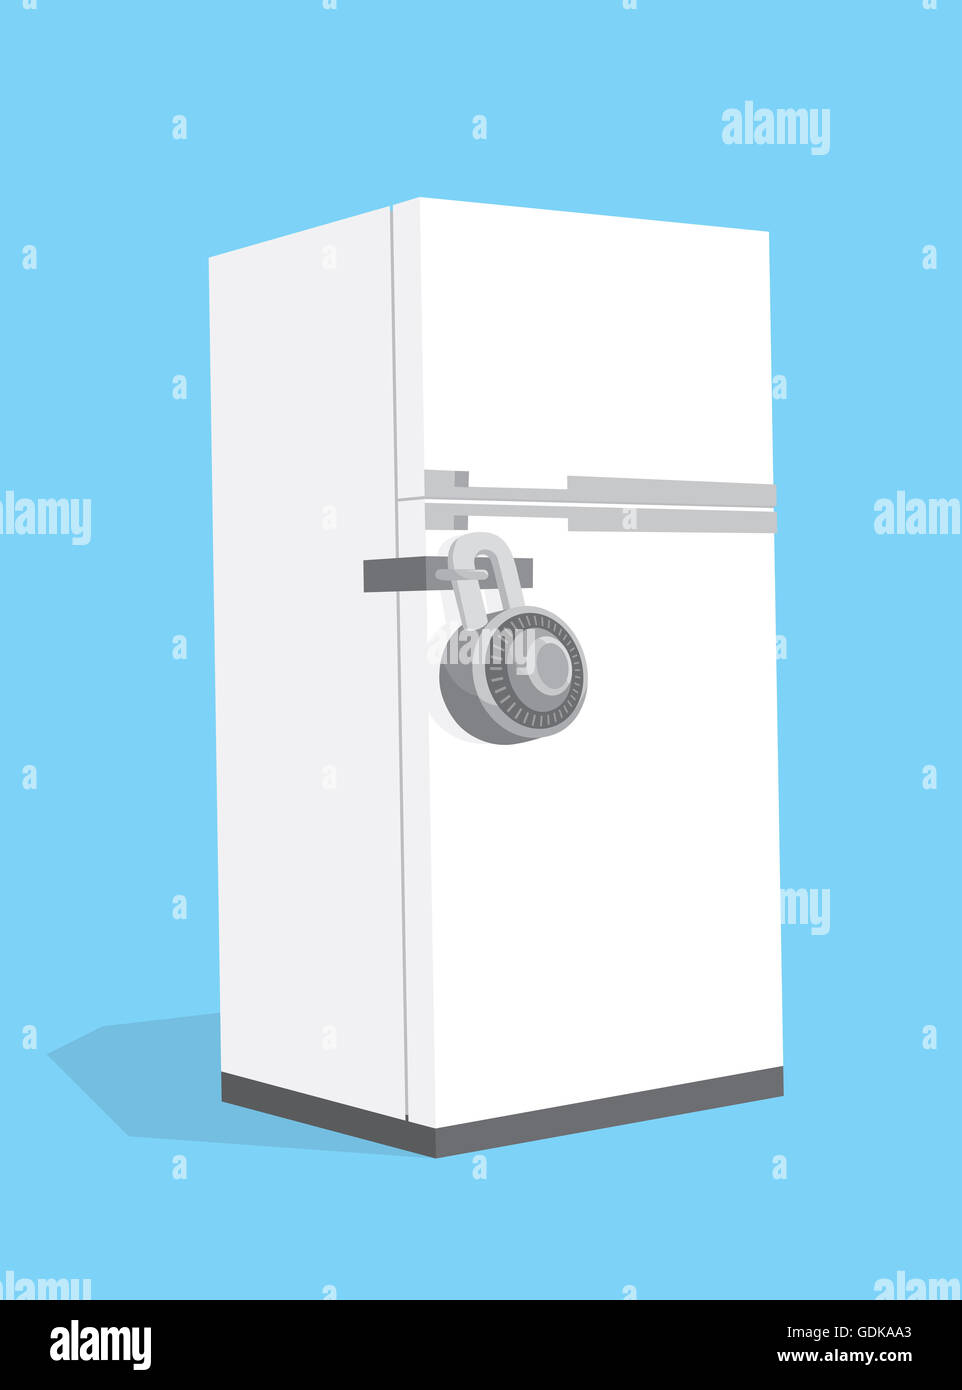 Cartoon illustration of diet fridge locked with combination padlock Stock Photo